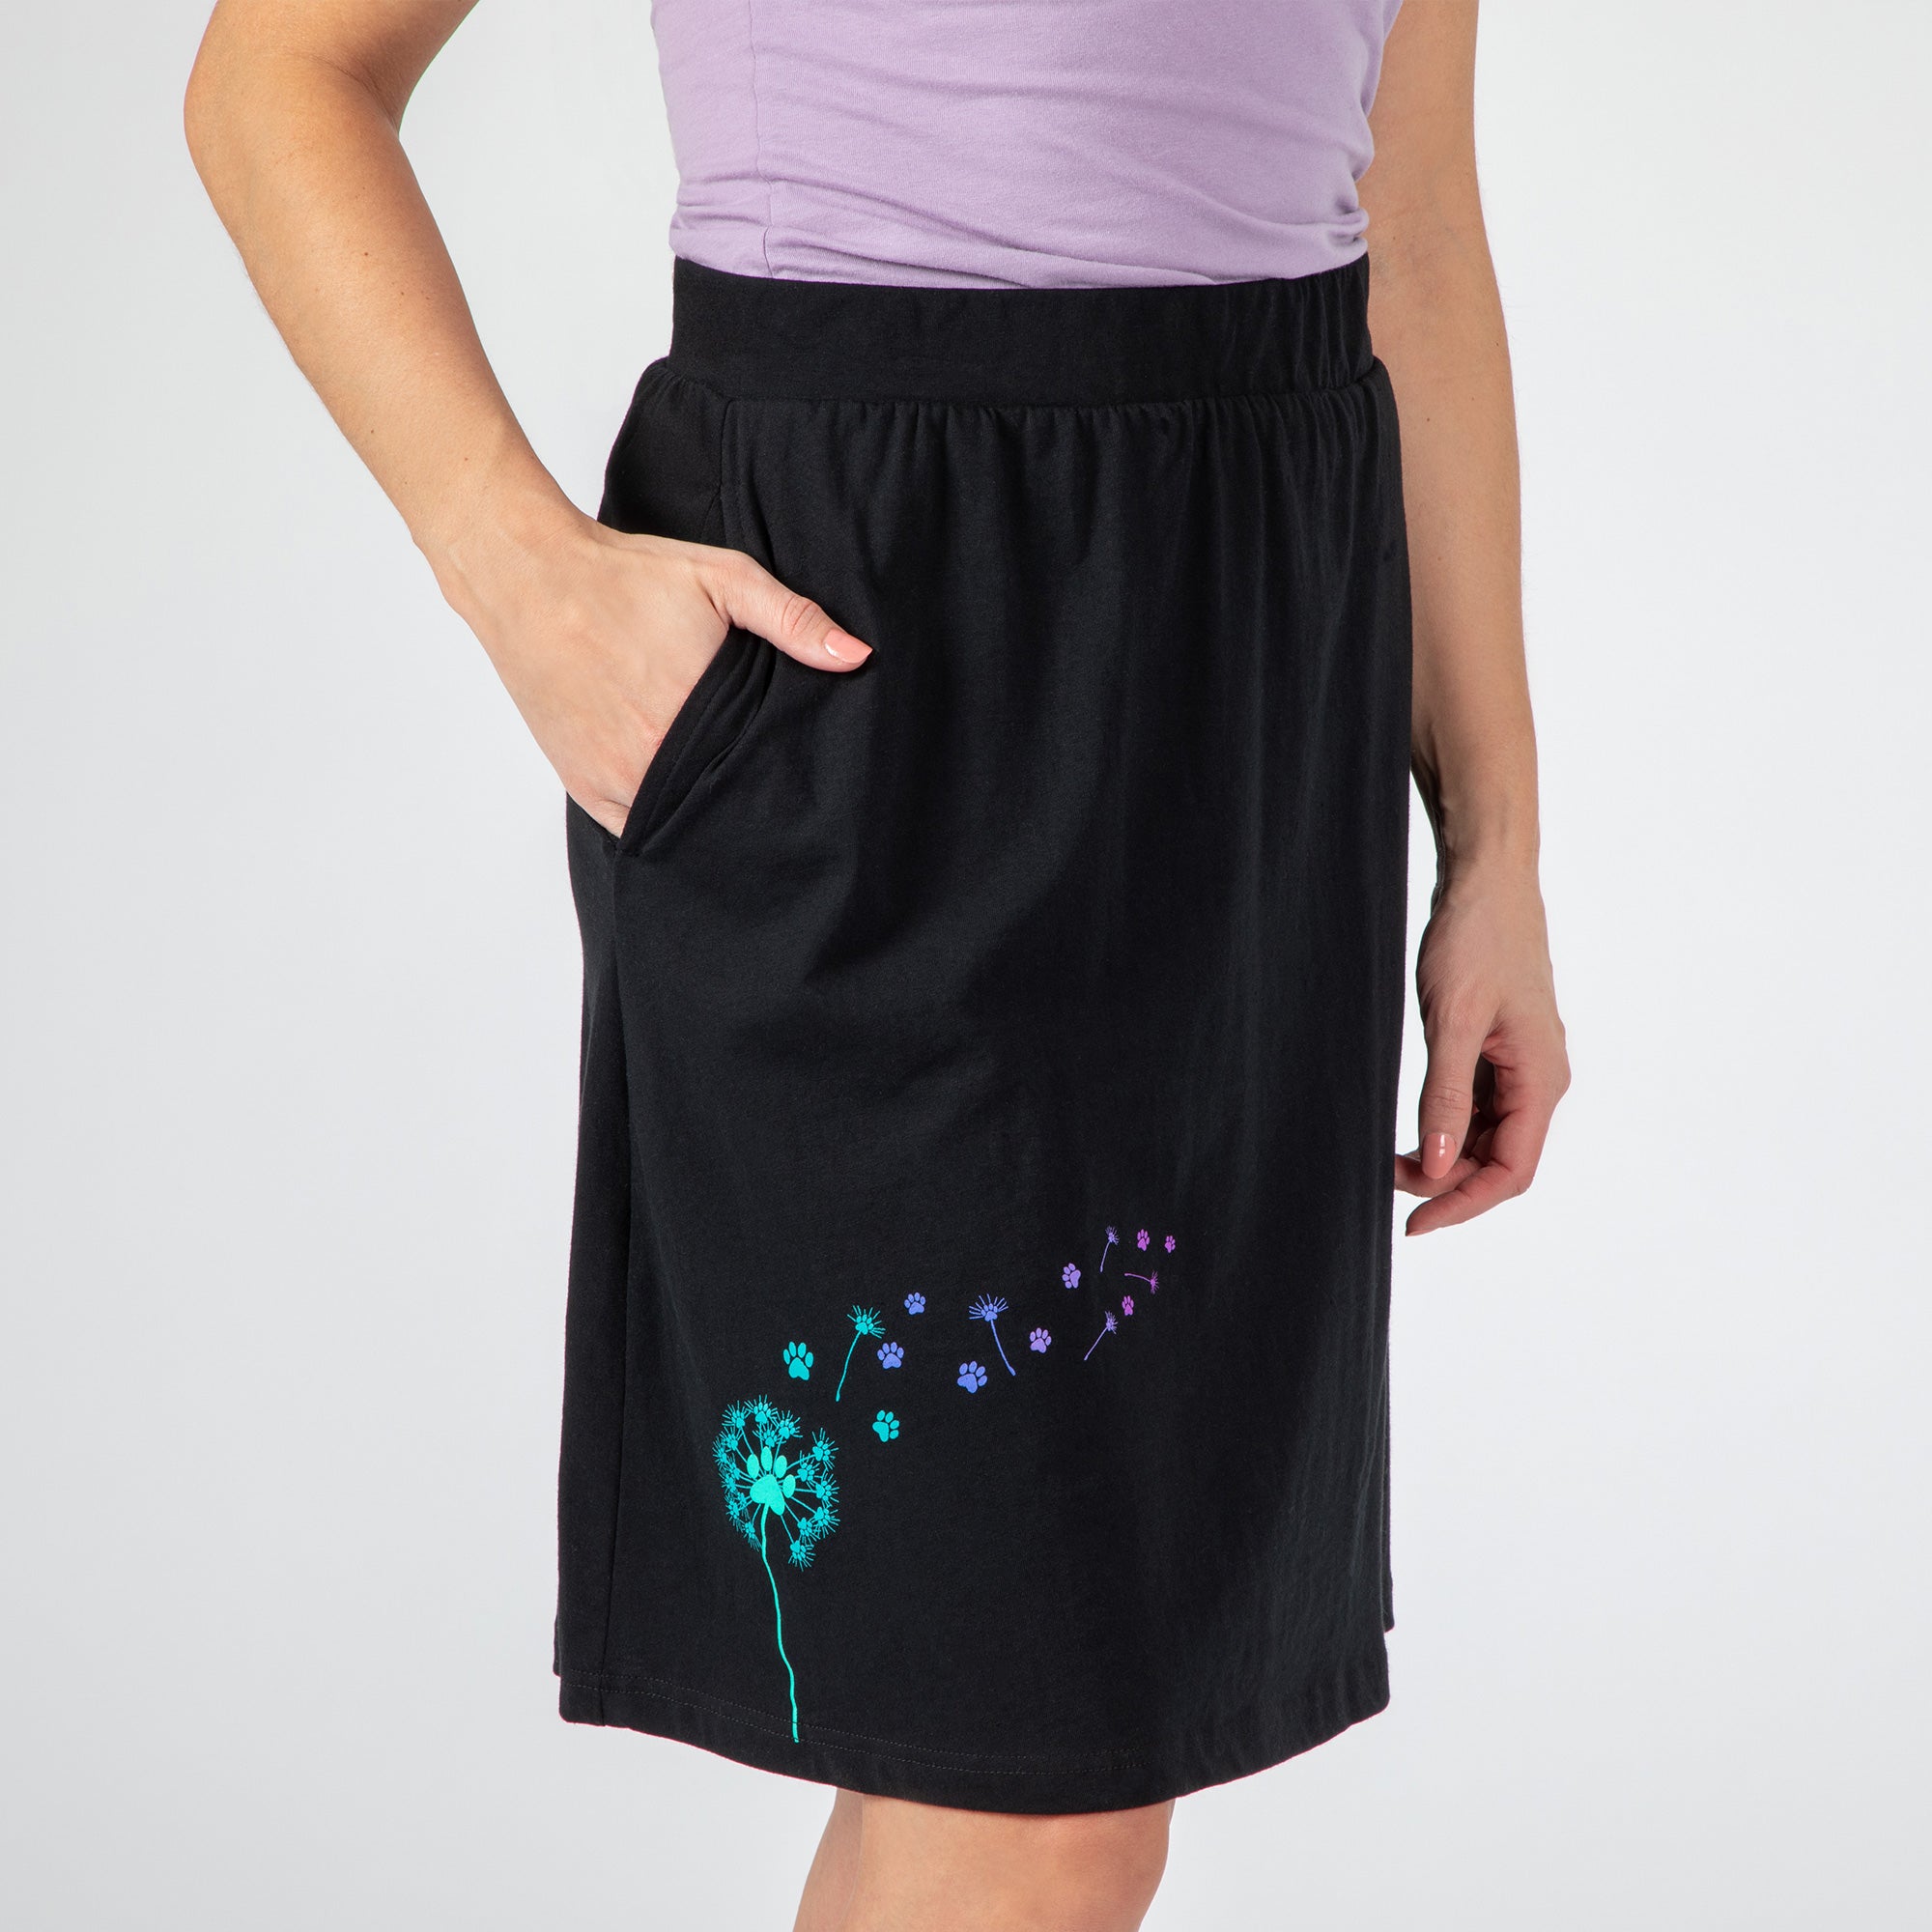 Dandelion Paw Print A-Line Skirt - XL